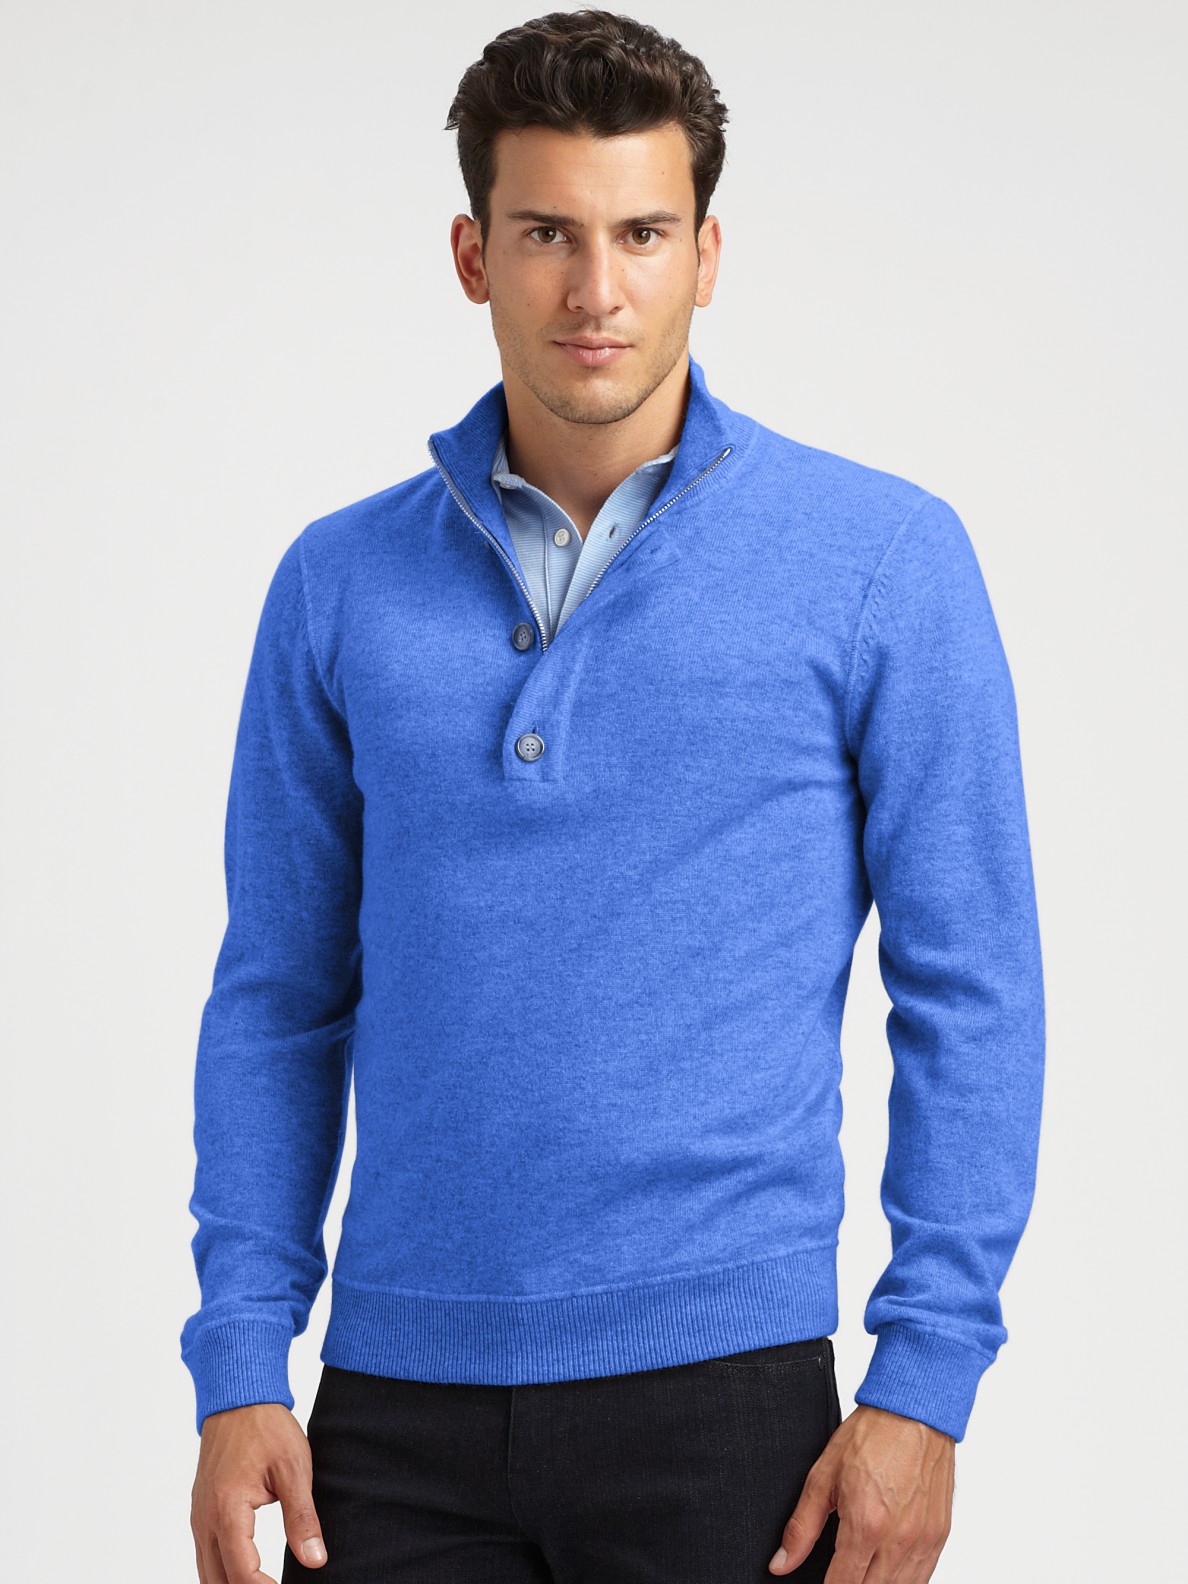 Lyst - Michael Kors Wool/cashmere Half-zip Sweater in Blue for Men